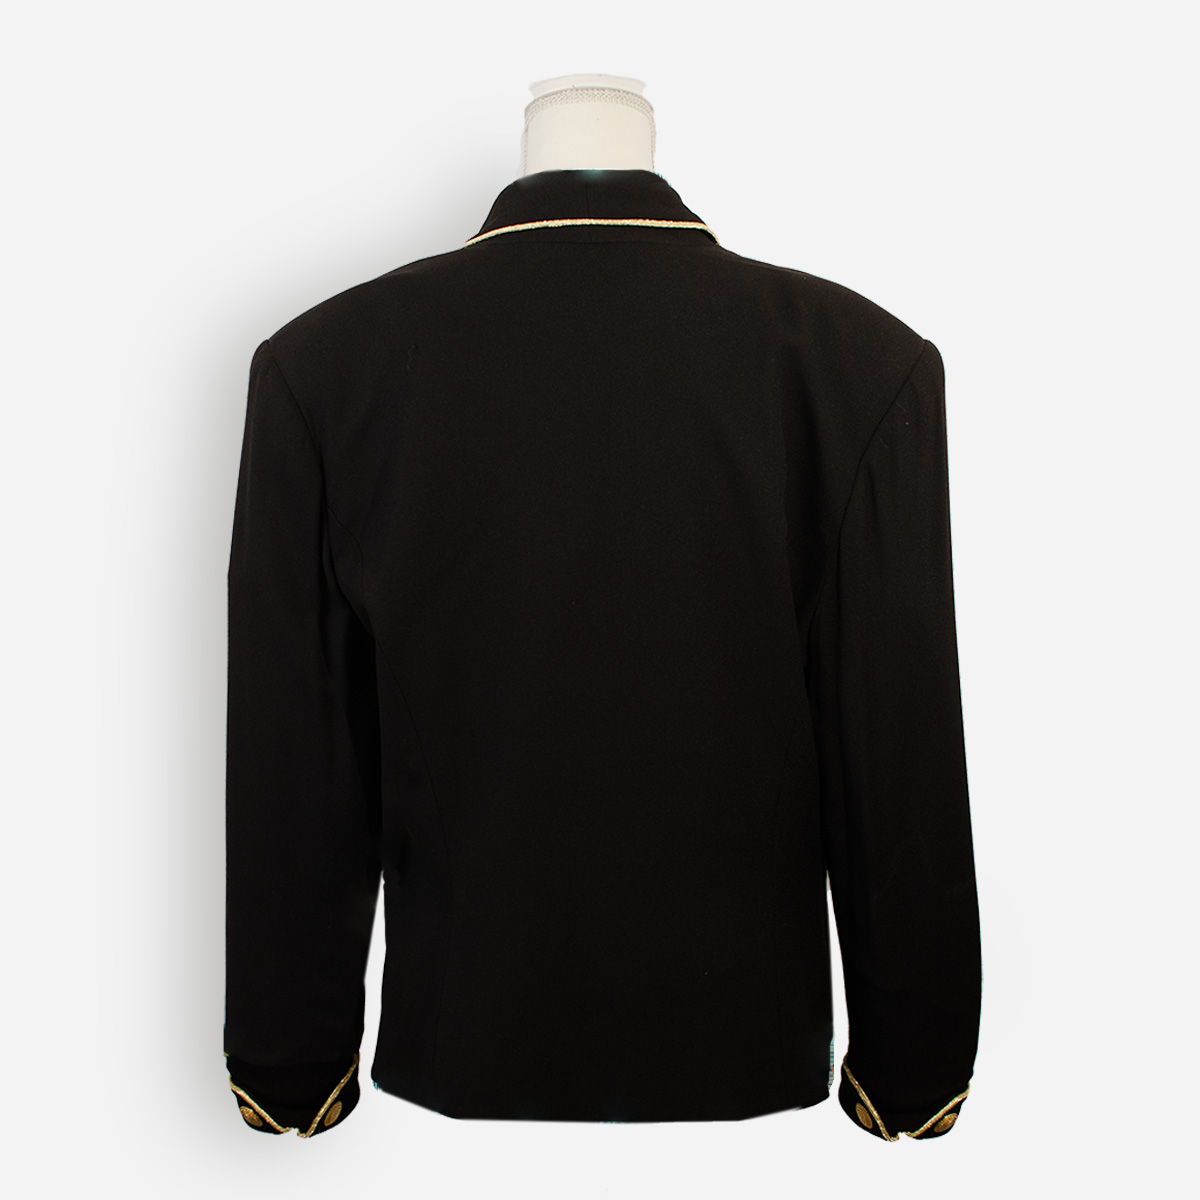 1980s black jacket, gold piping